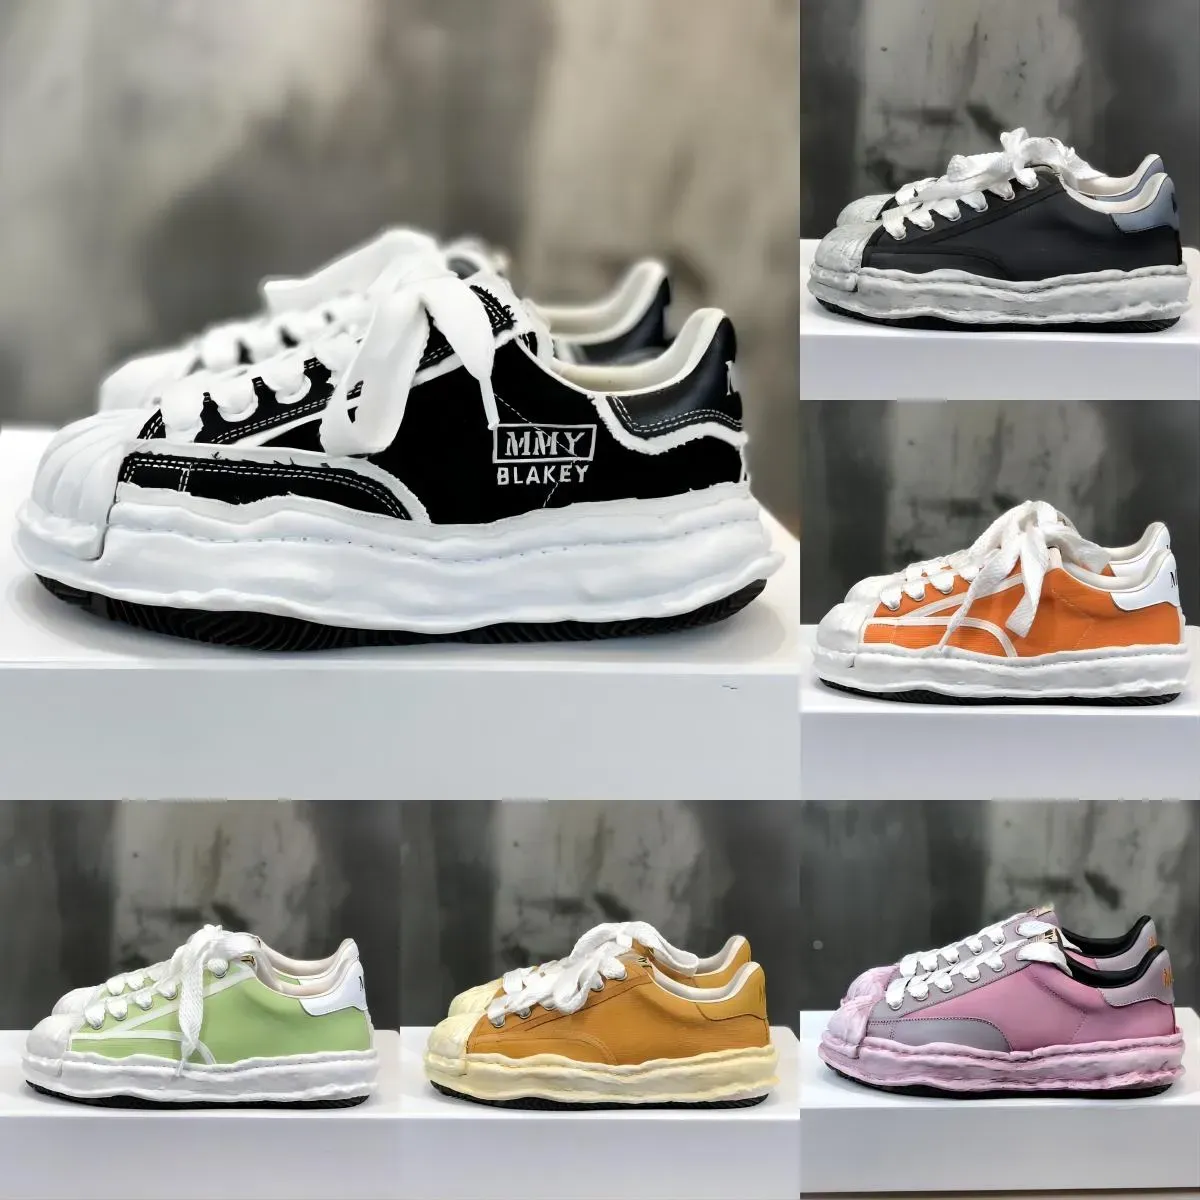 Designer Dissoing Canvas Schuhe Washed Style Freizeitschuh Damen Herren Lace-up Maison Mihara Yasuhiro Gummi Trainer Sneaker